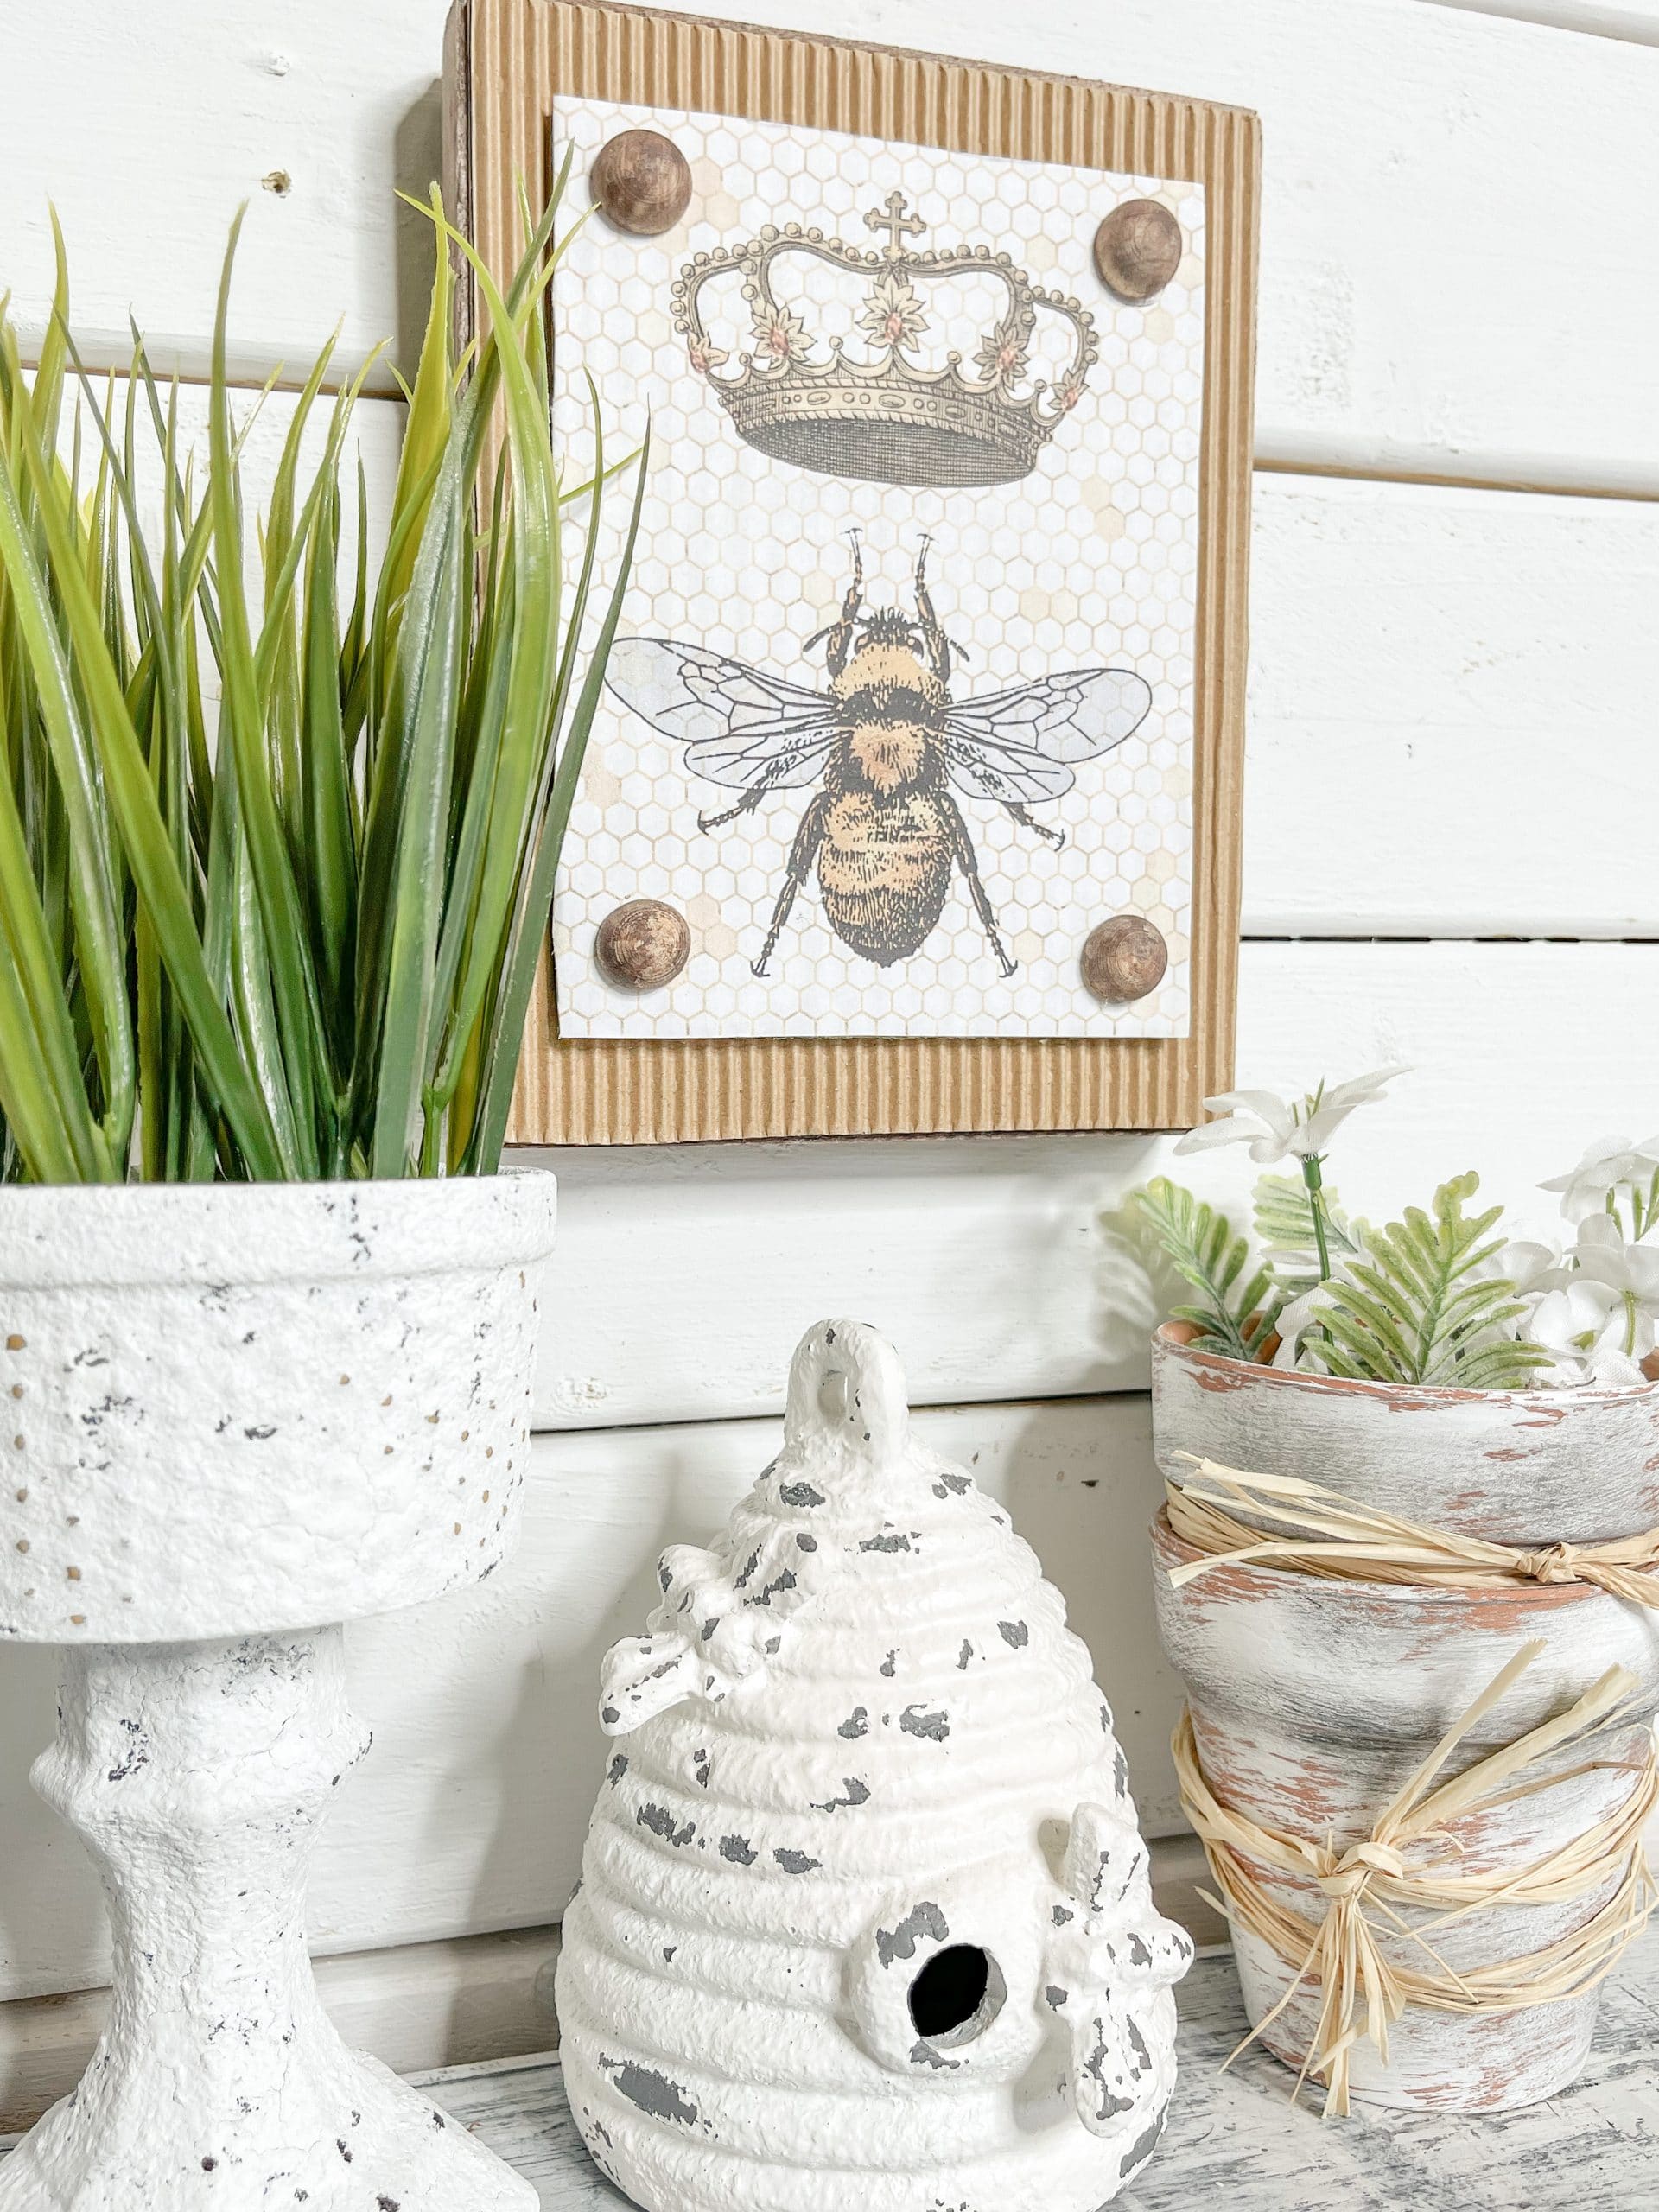 DIY Home Decor with FREE Vintage Bee Printable